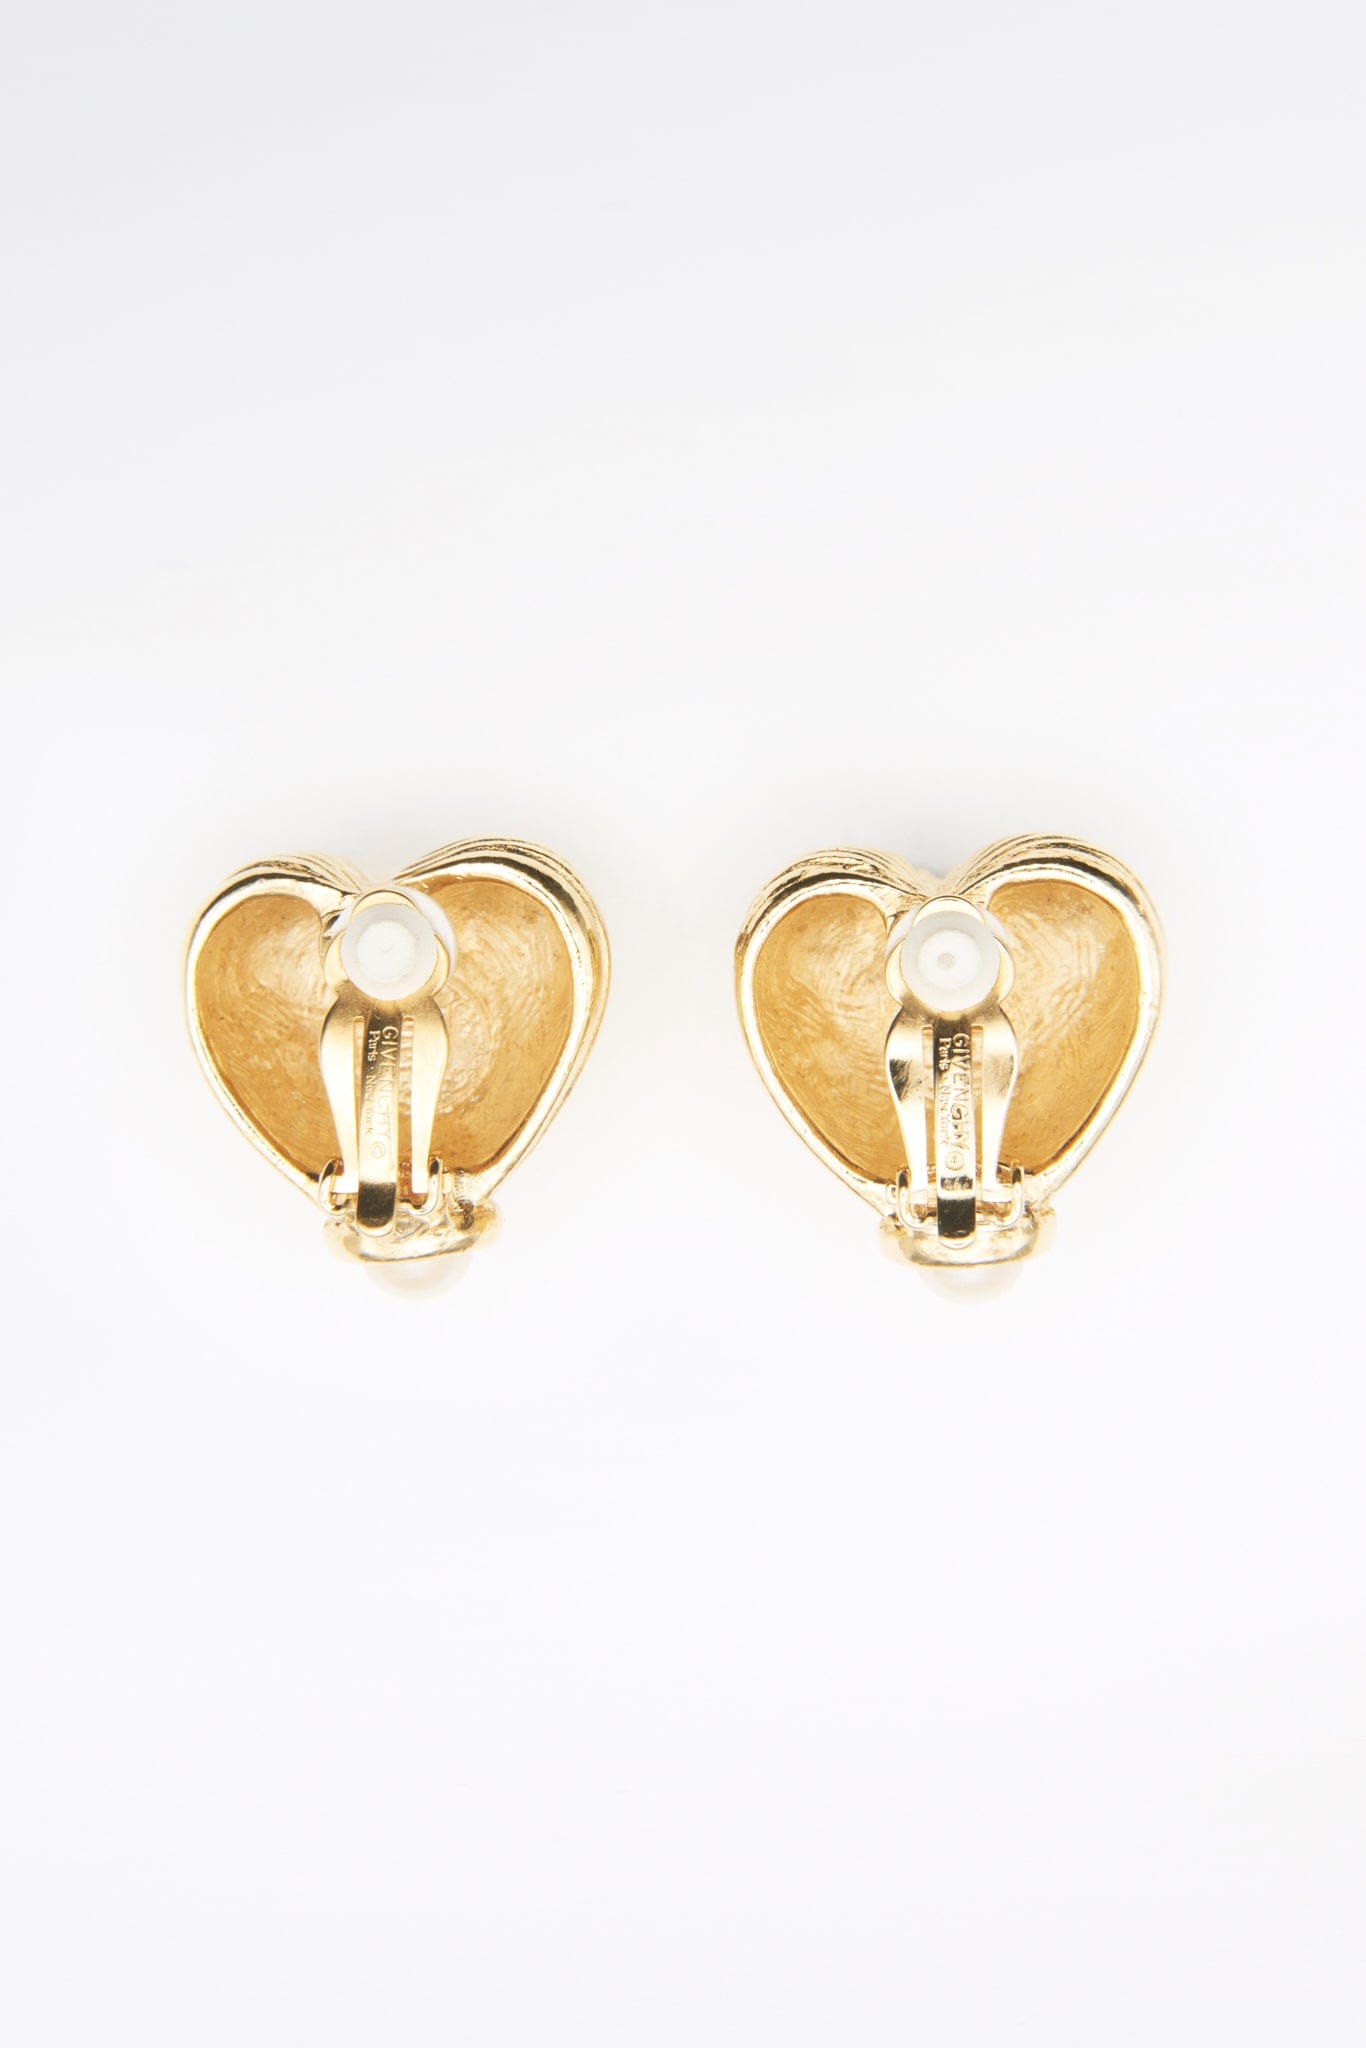 Givenchy Vintage Heart Logo Stud Earrings - Gold-Tone Metal Stud, Earrings  - GIV193589 | The RealReal